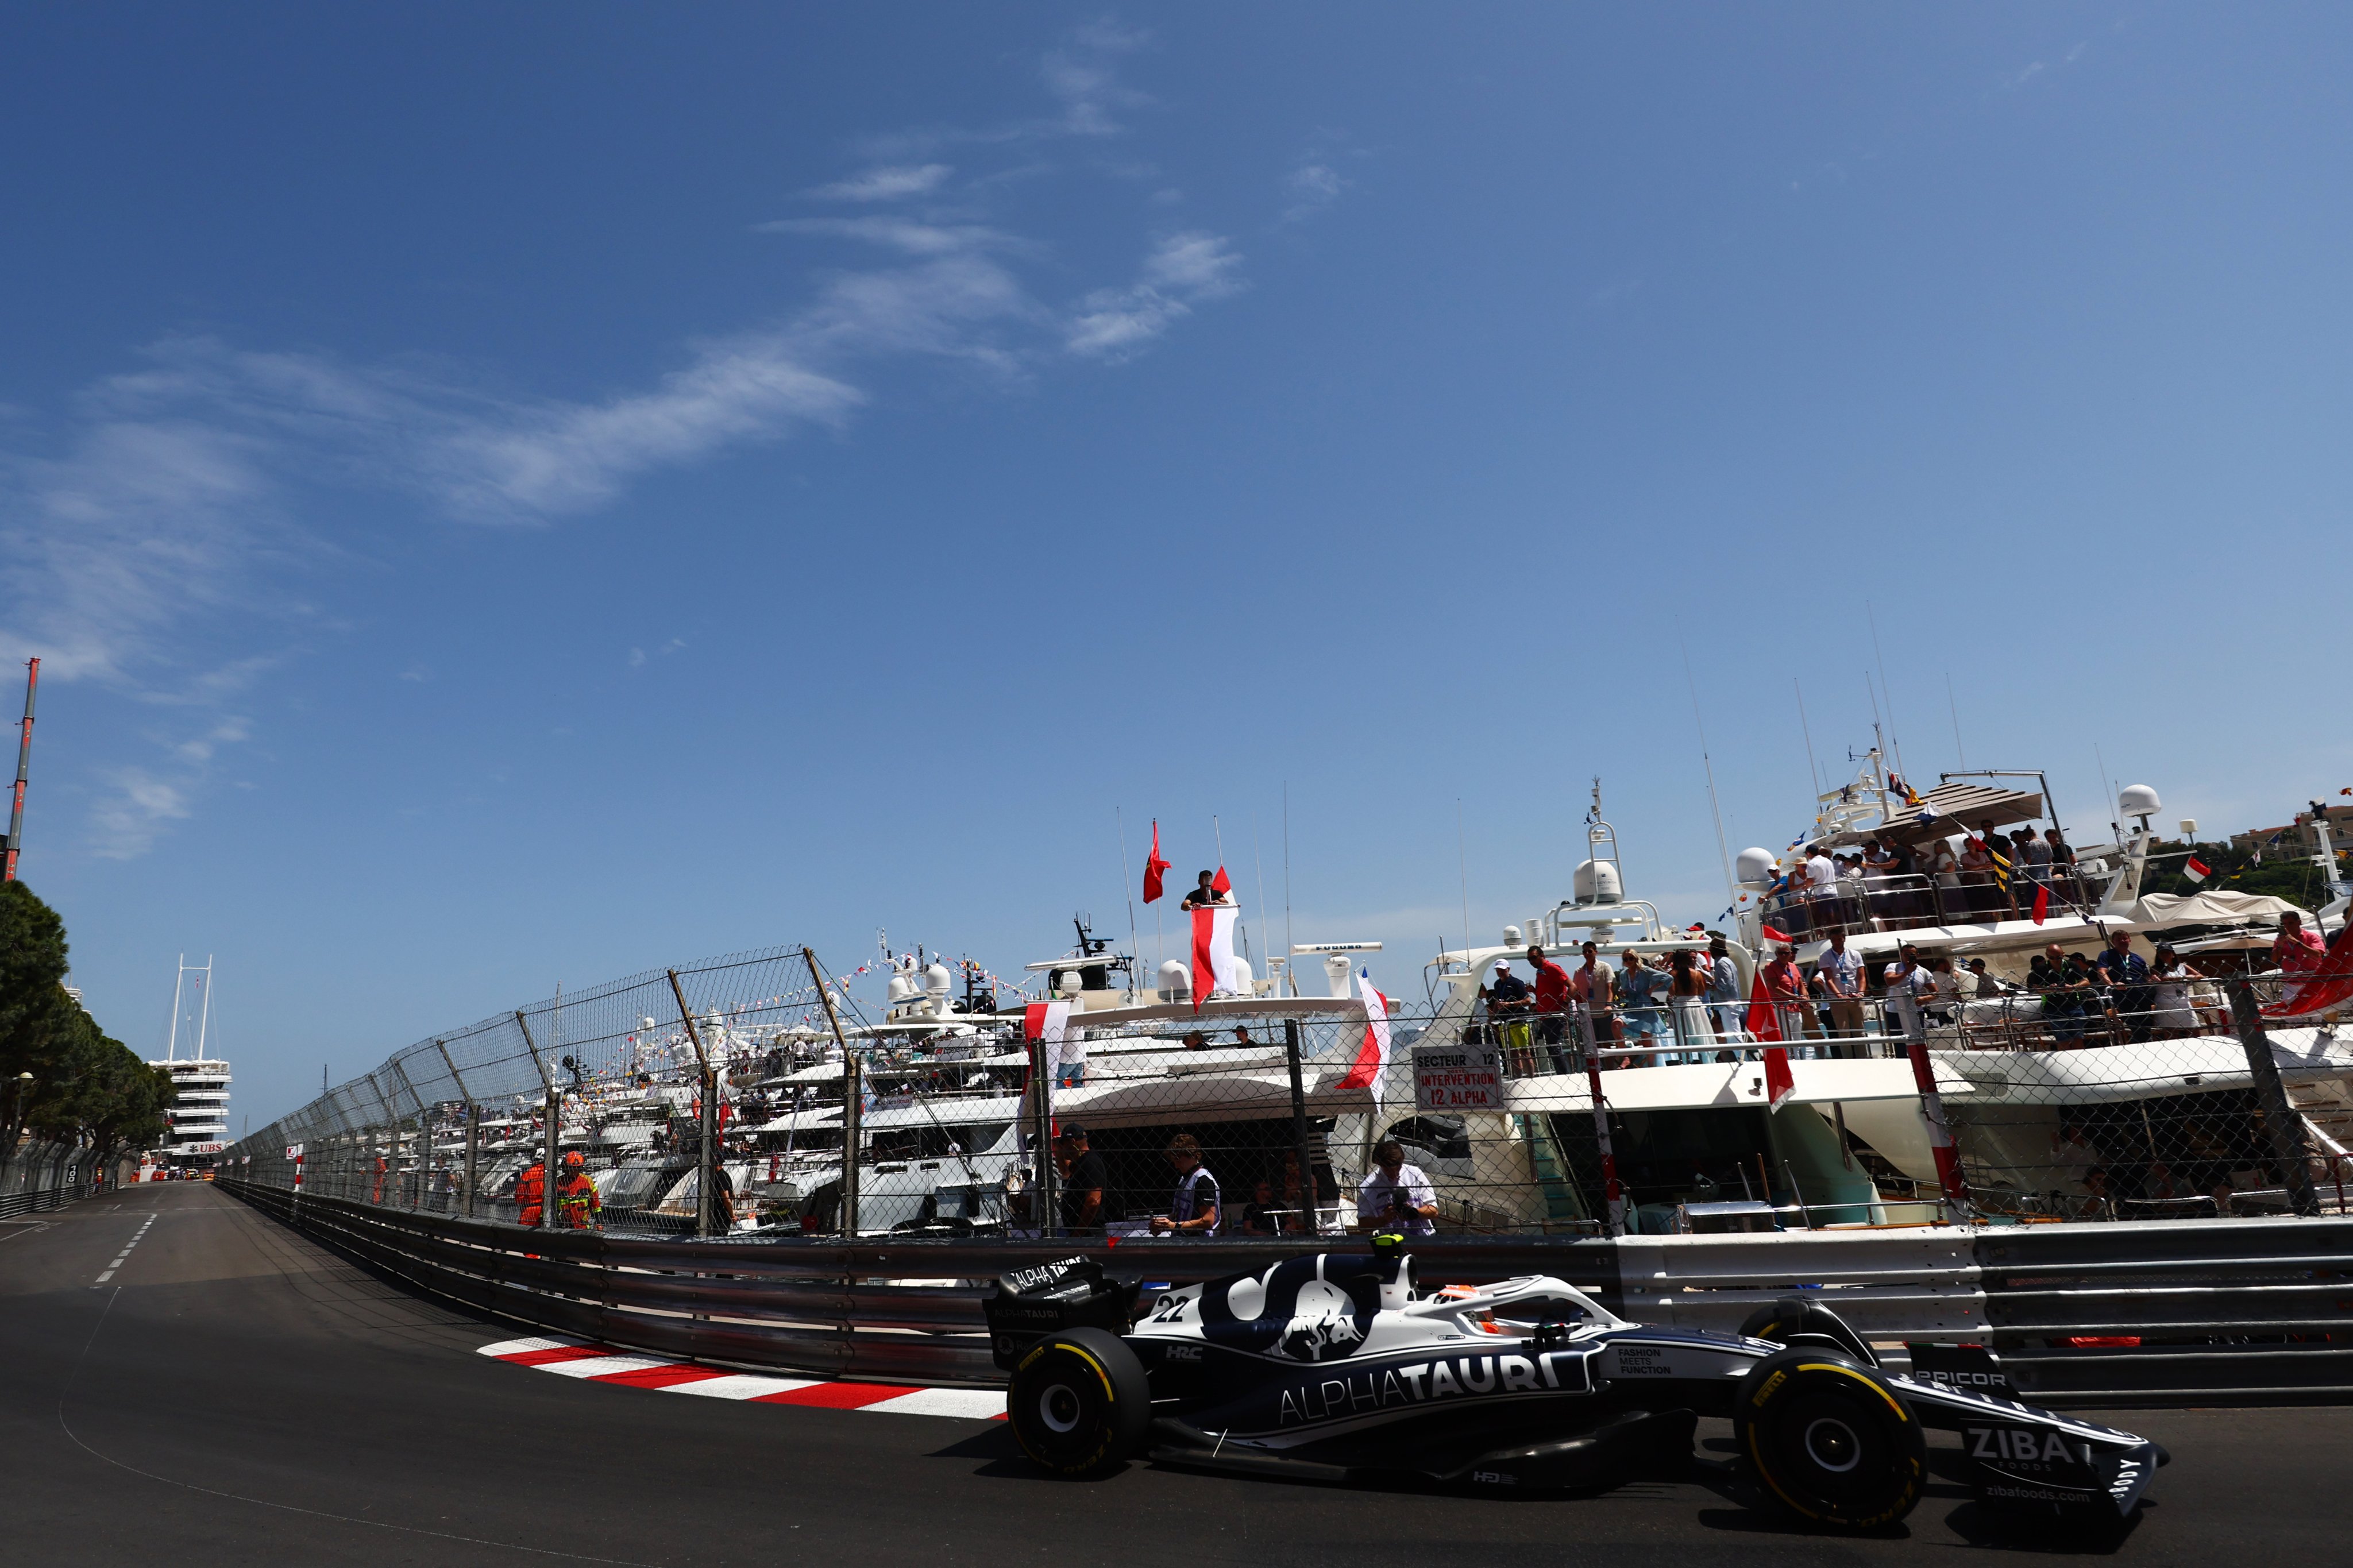 Memo Wardian sag Stereotype Formula 1 on Twitter: "Just Monaco views ¯\_(ツ)_/¯ #MonacoGP #F1  https://t.co/9R6QqfRh0c" / Twitter